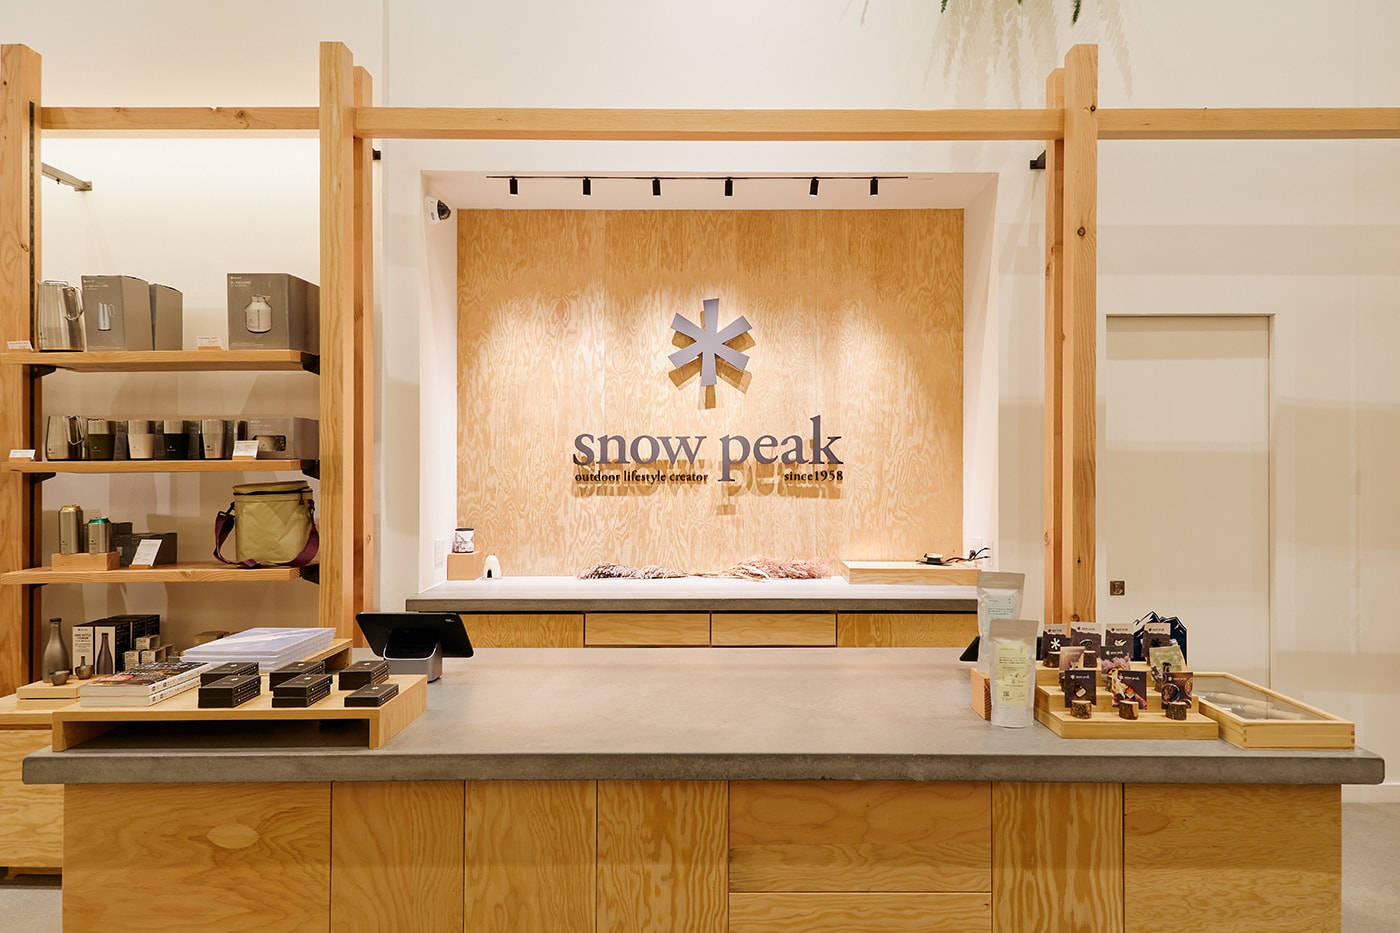 Snow Peak USA Brooklyn new store opening info Williamsburg 